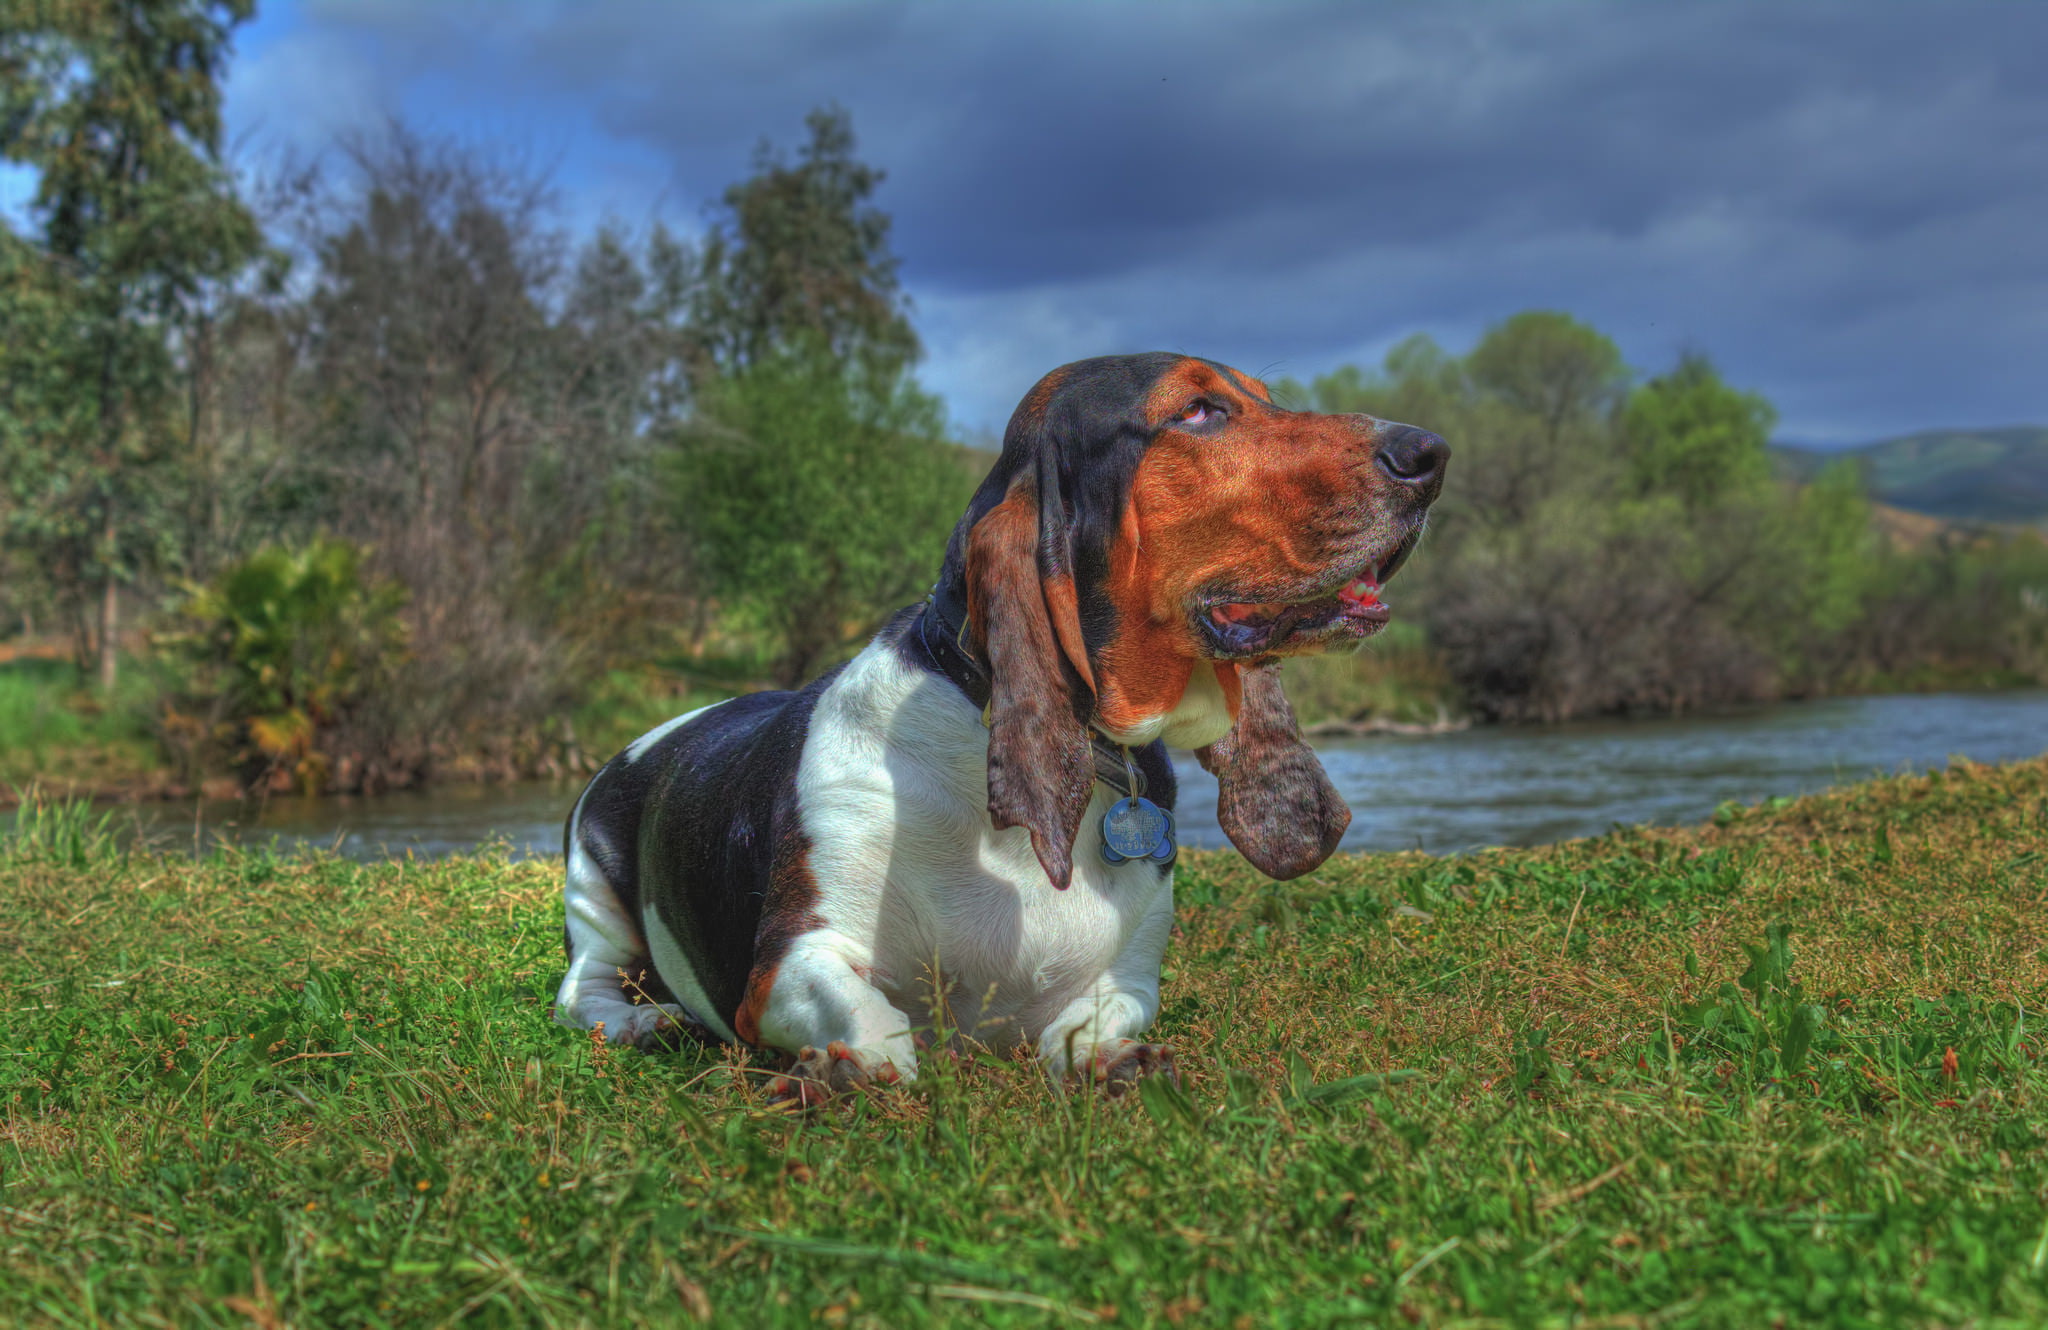 grass, nature, river, dog, The Basset hound